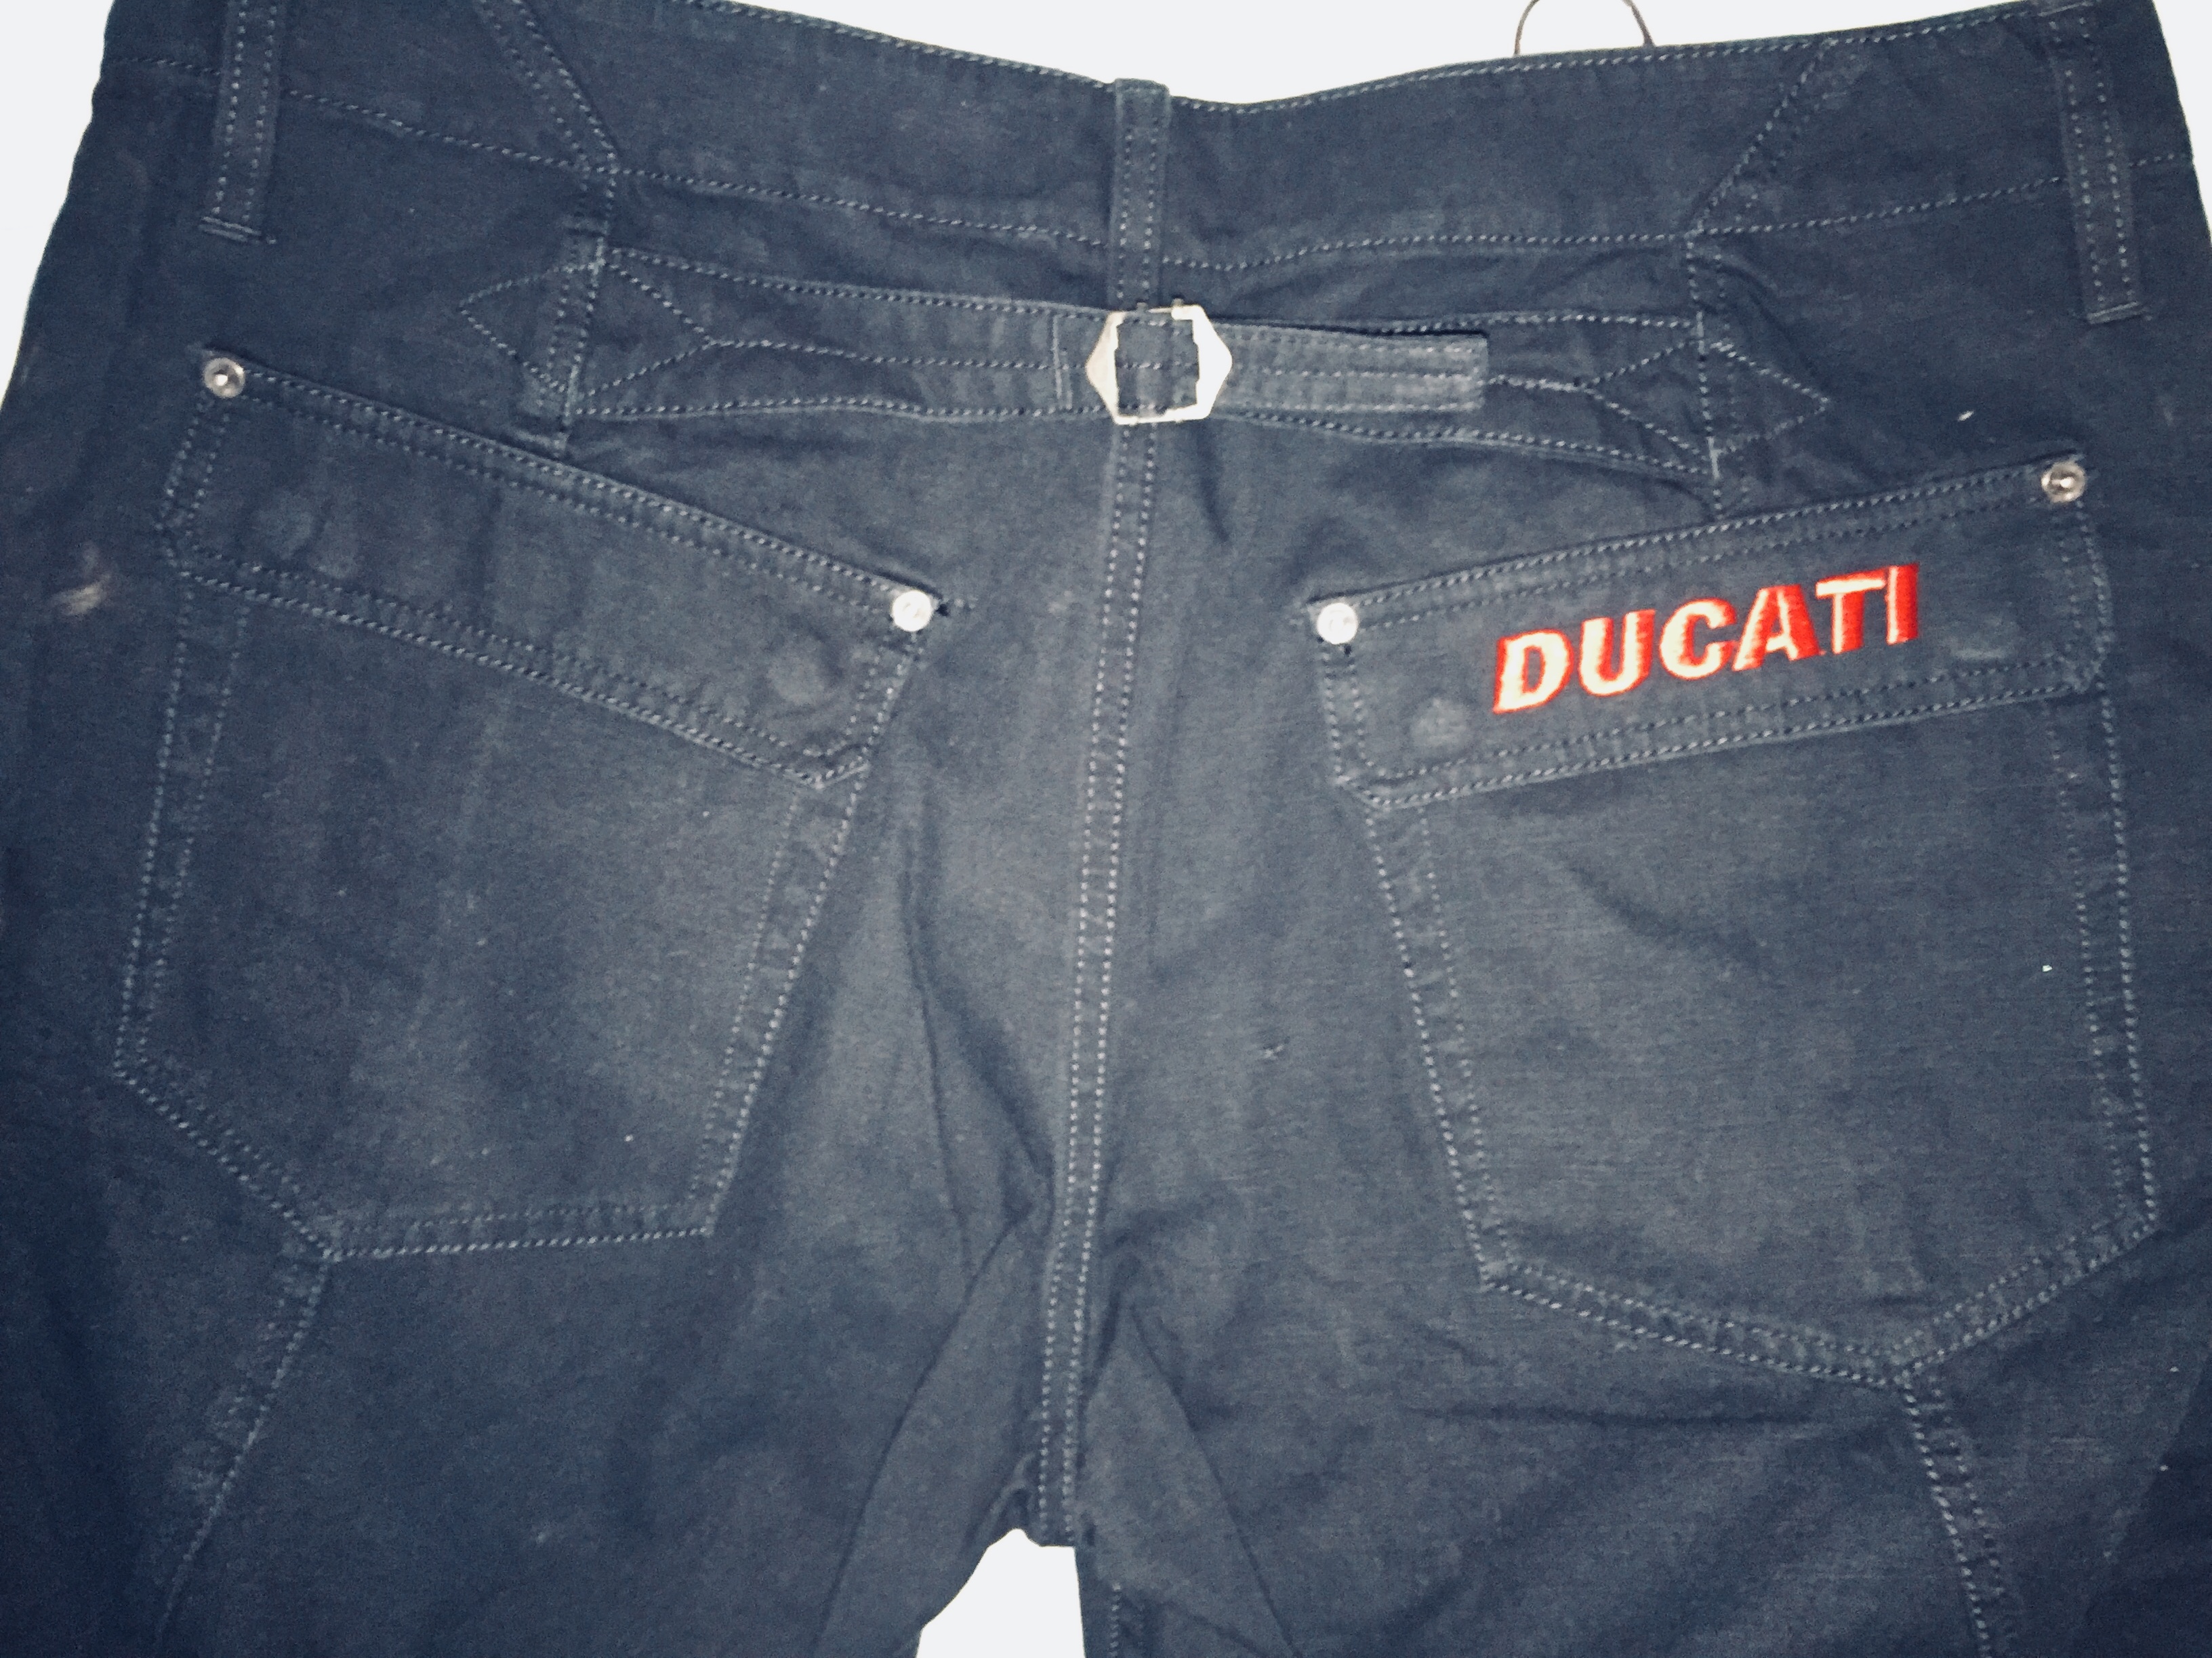 puma -  Pants - Ducati Riding Jeans